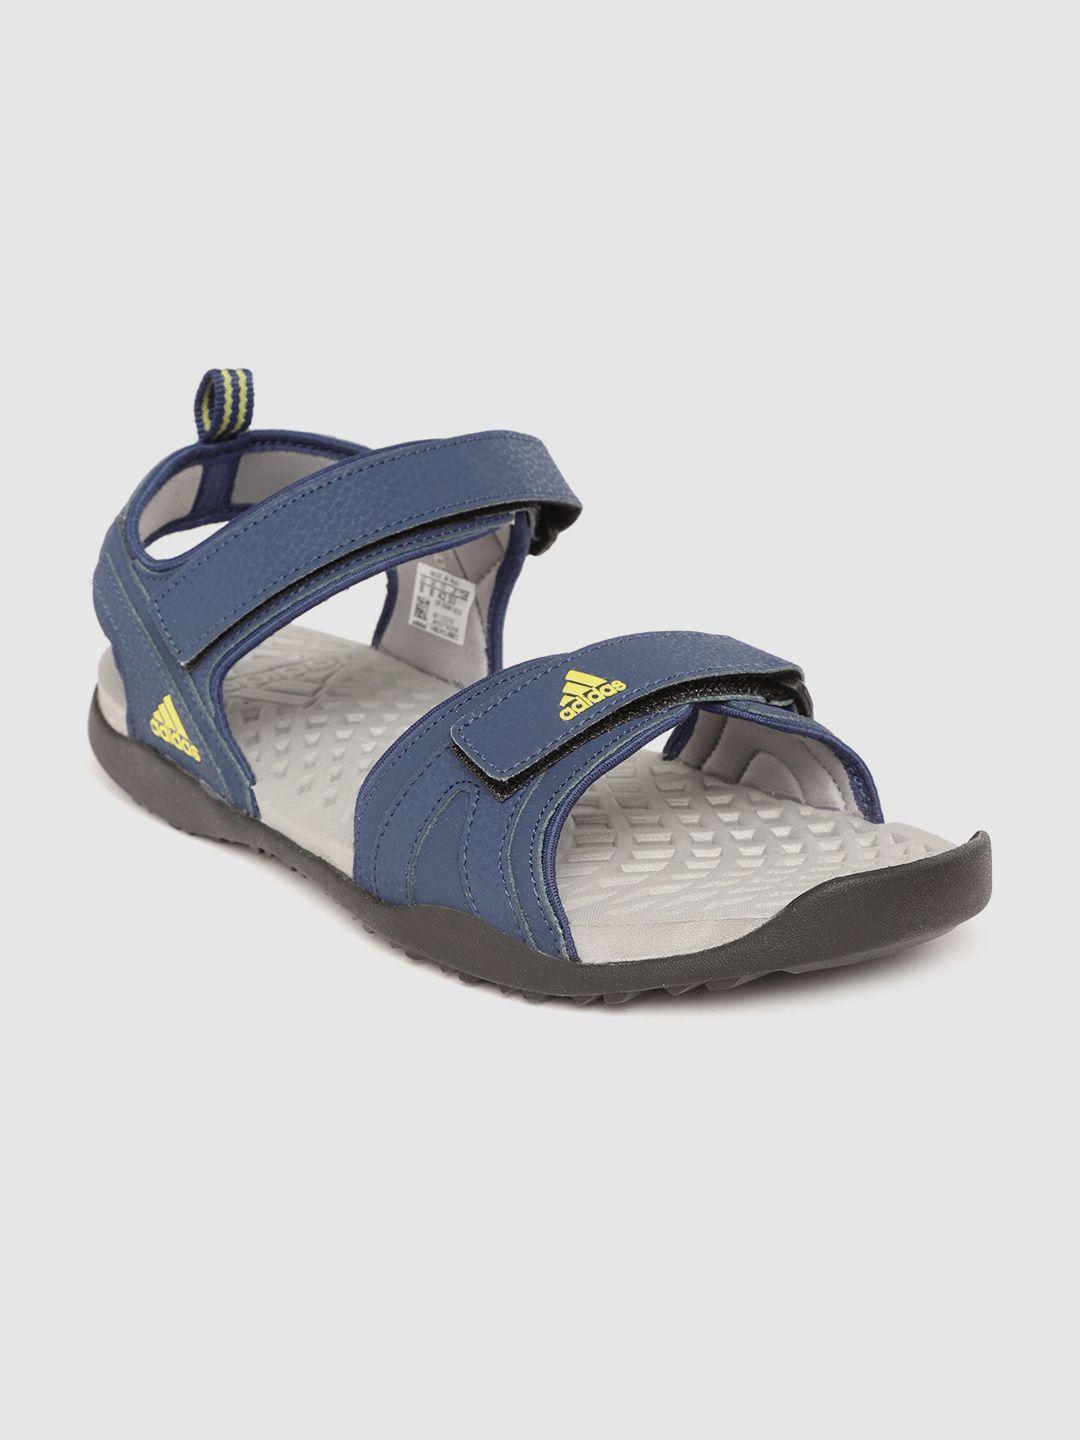 adidas-men-blue-&-grey-solid-thanga-sports-sandals